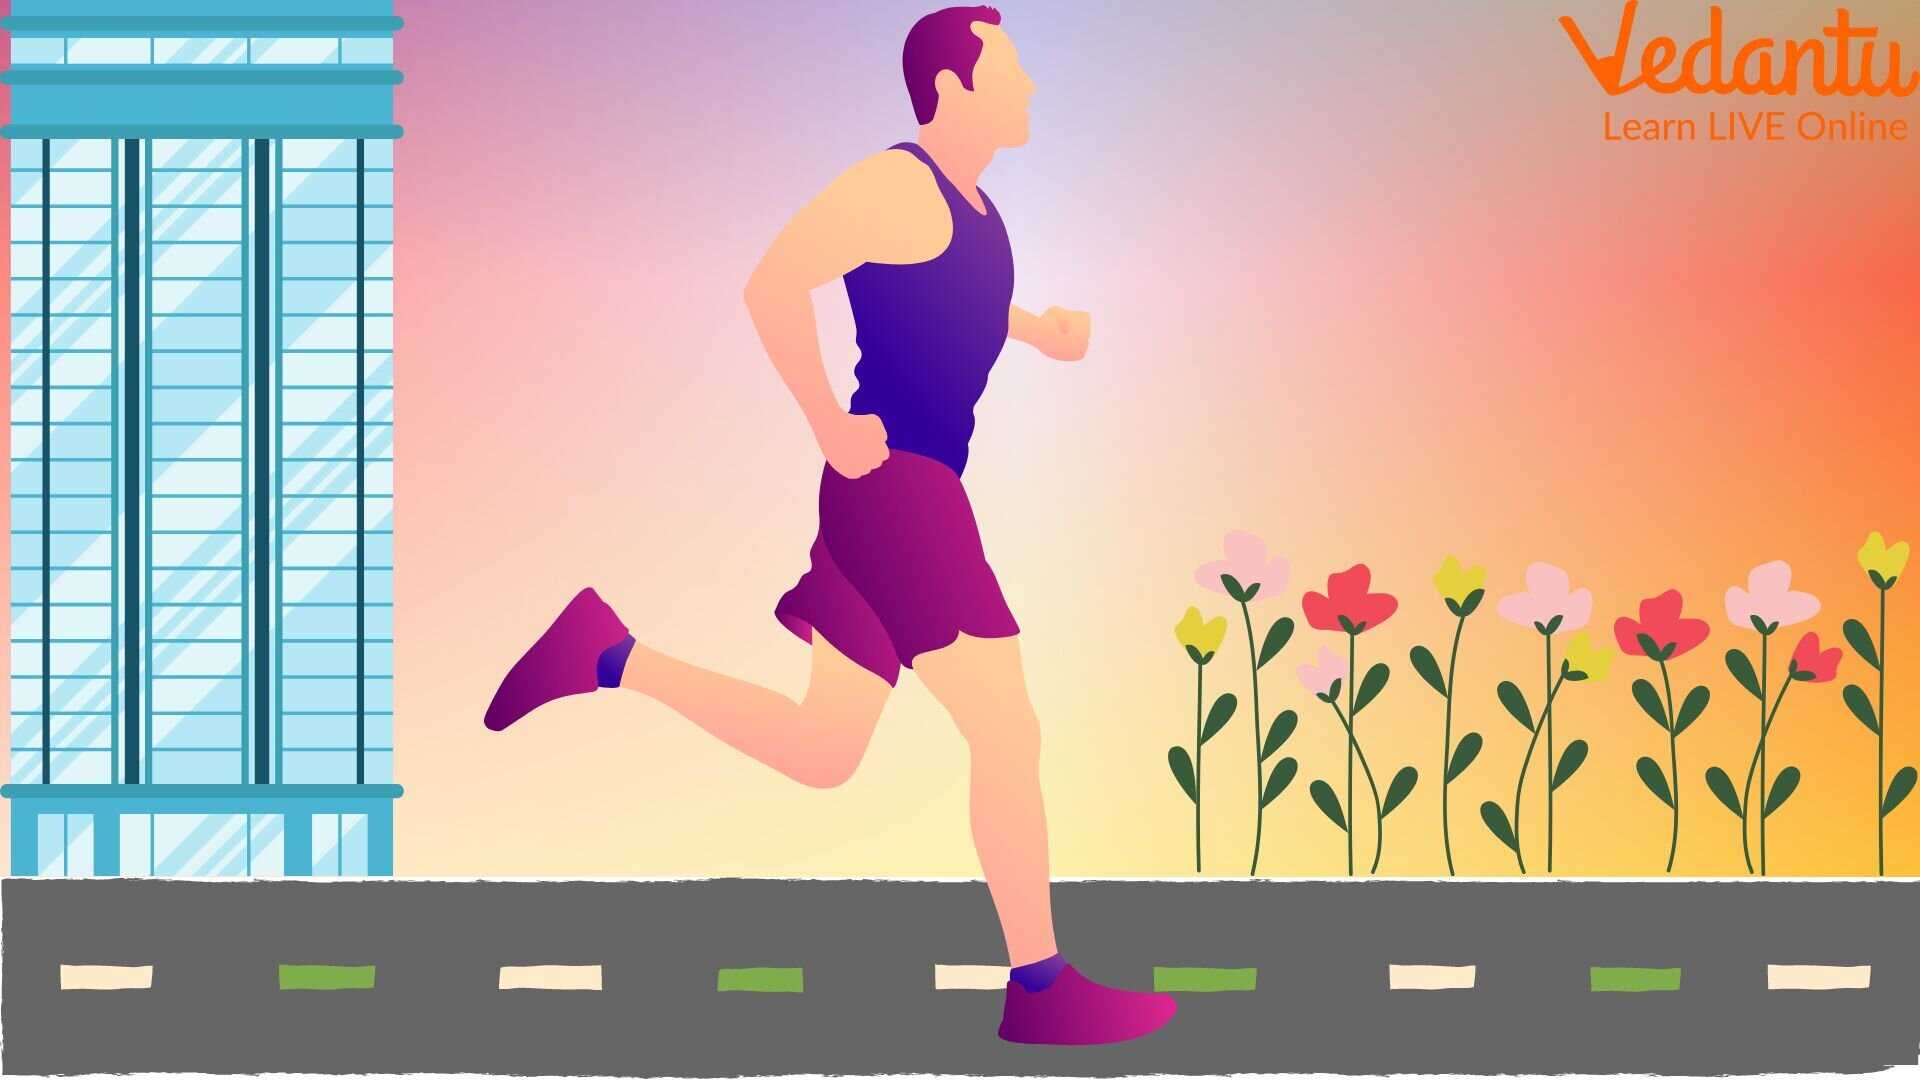 Running Benefits Your Health